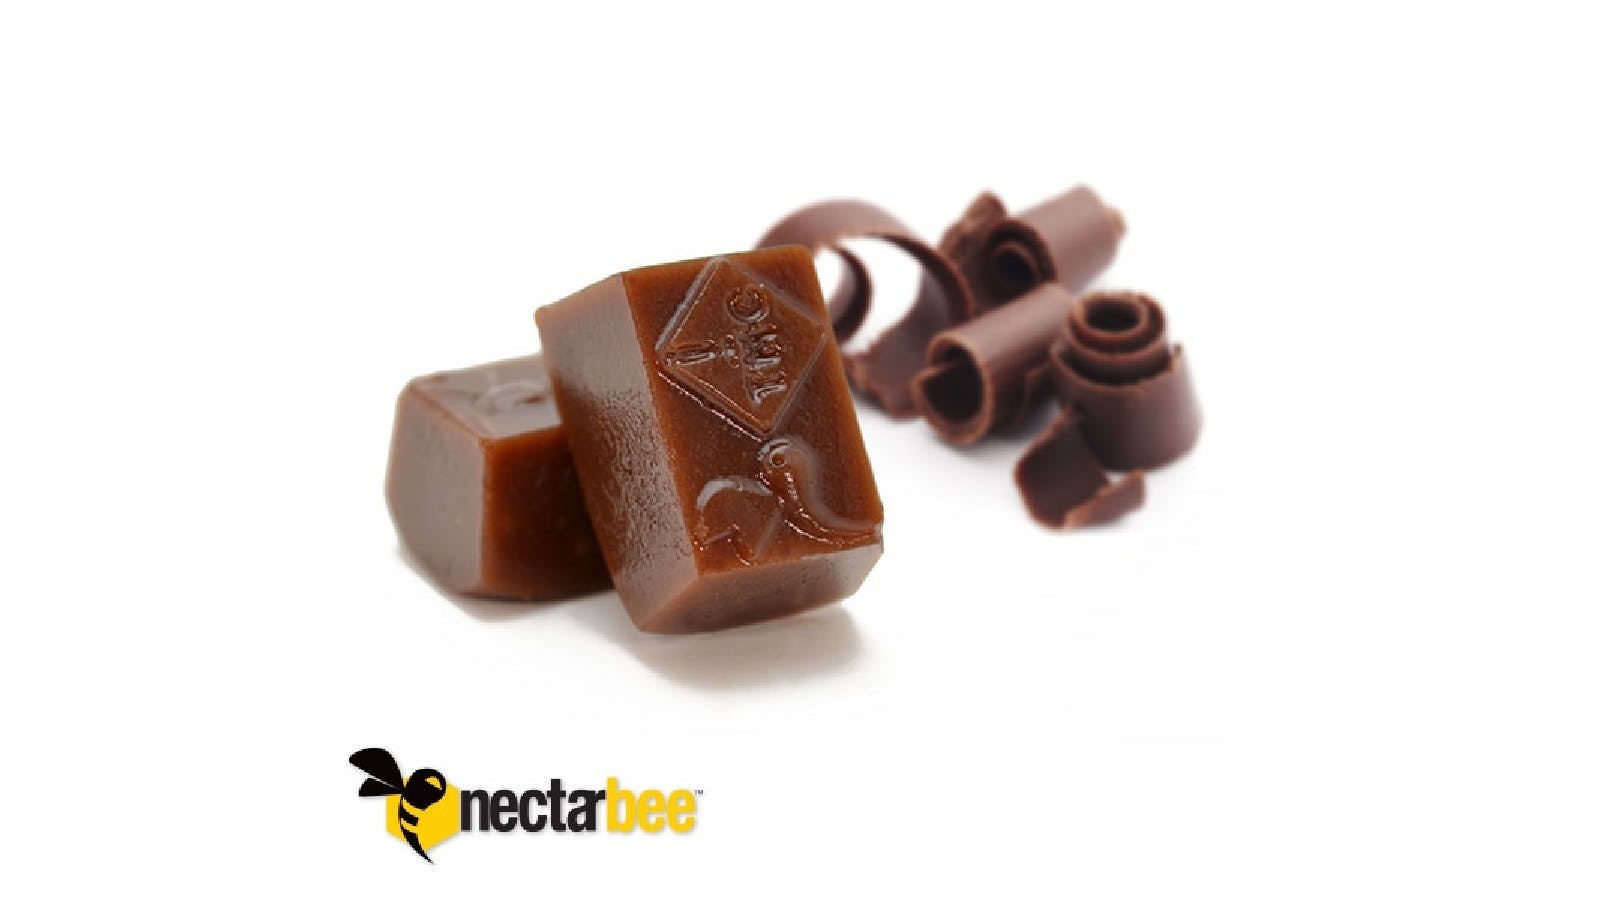 edible-nectarbee-chocolate-caramel-80mg